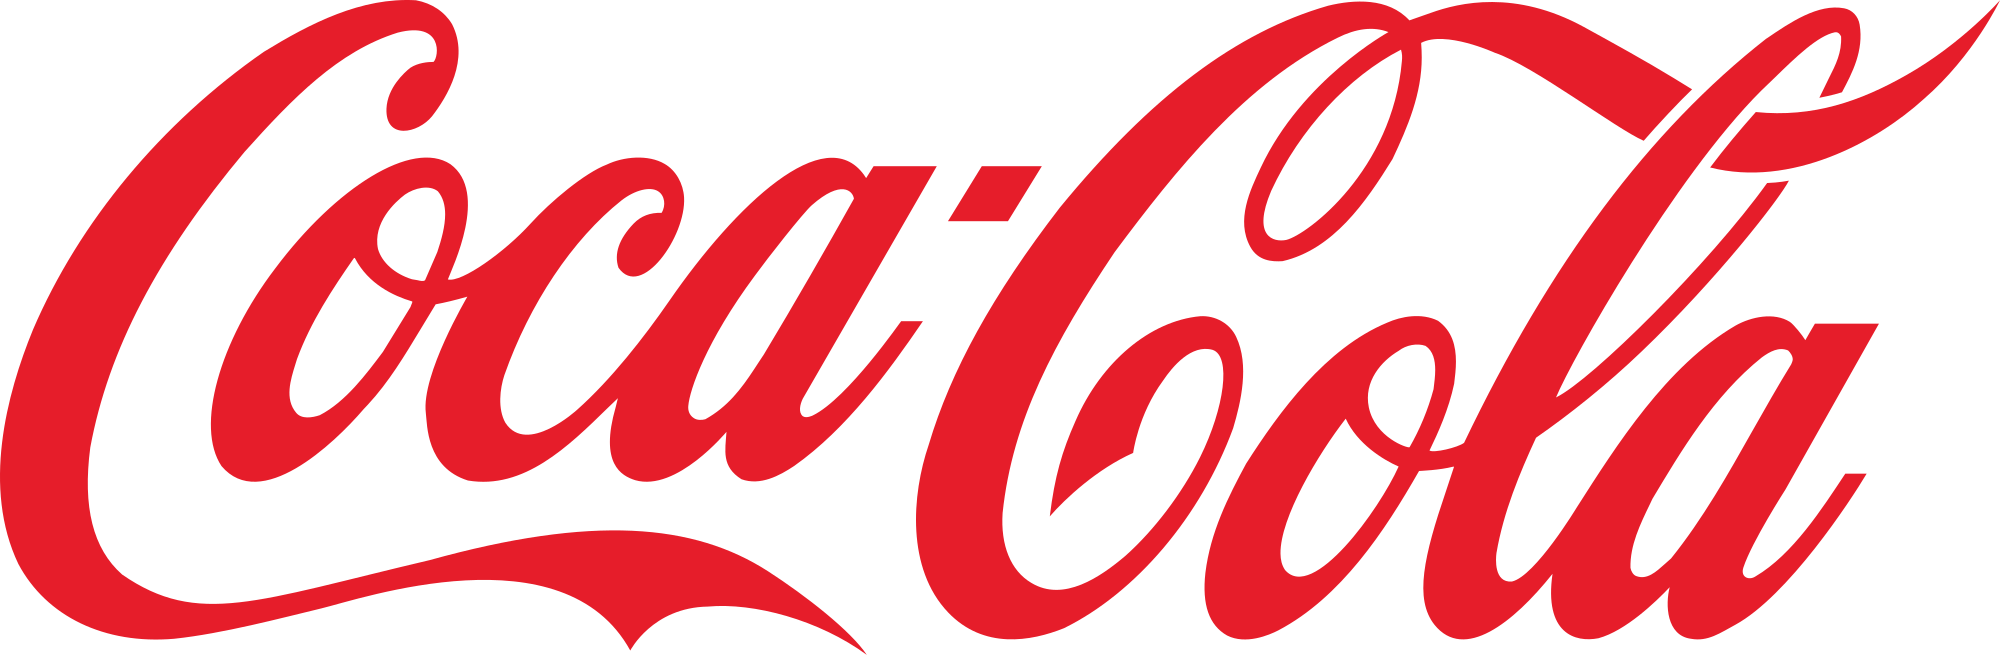 coca-cola_logo-design